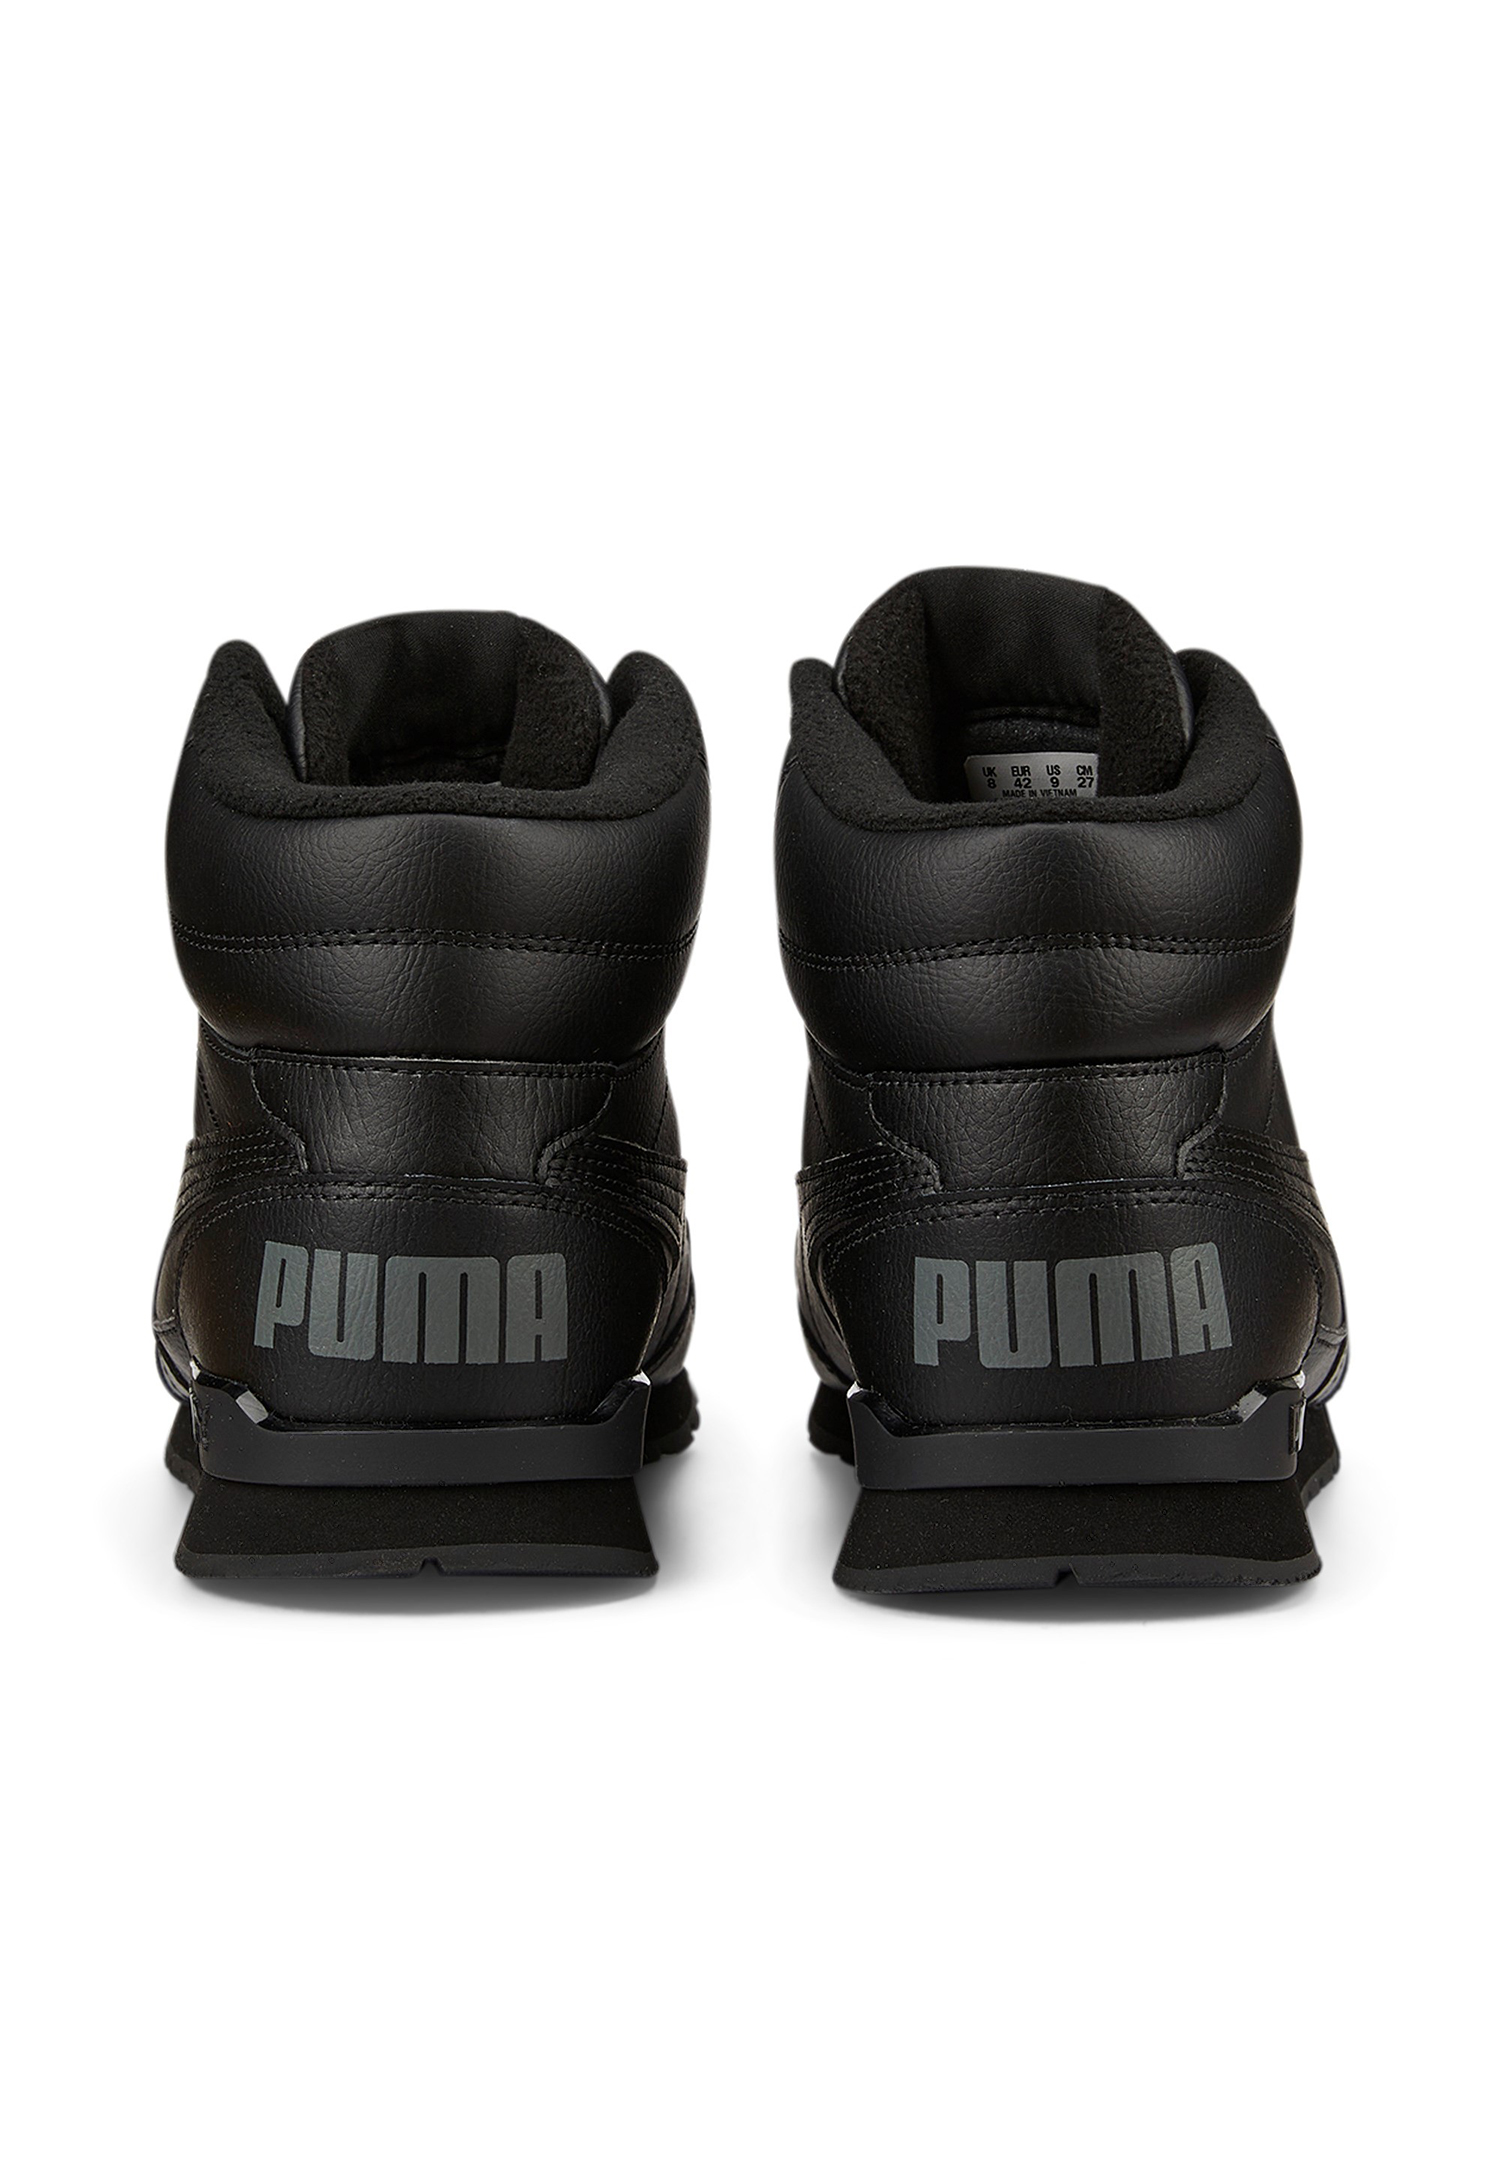 Puma ST RUNNER V3 MID L Herren Sneaker Winterschuhe 387638 01 schwarz